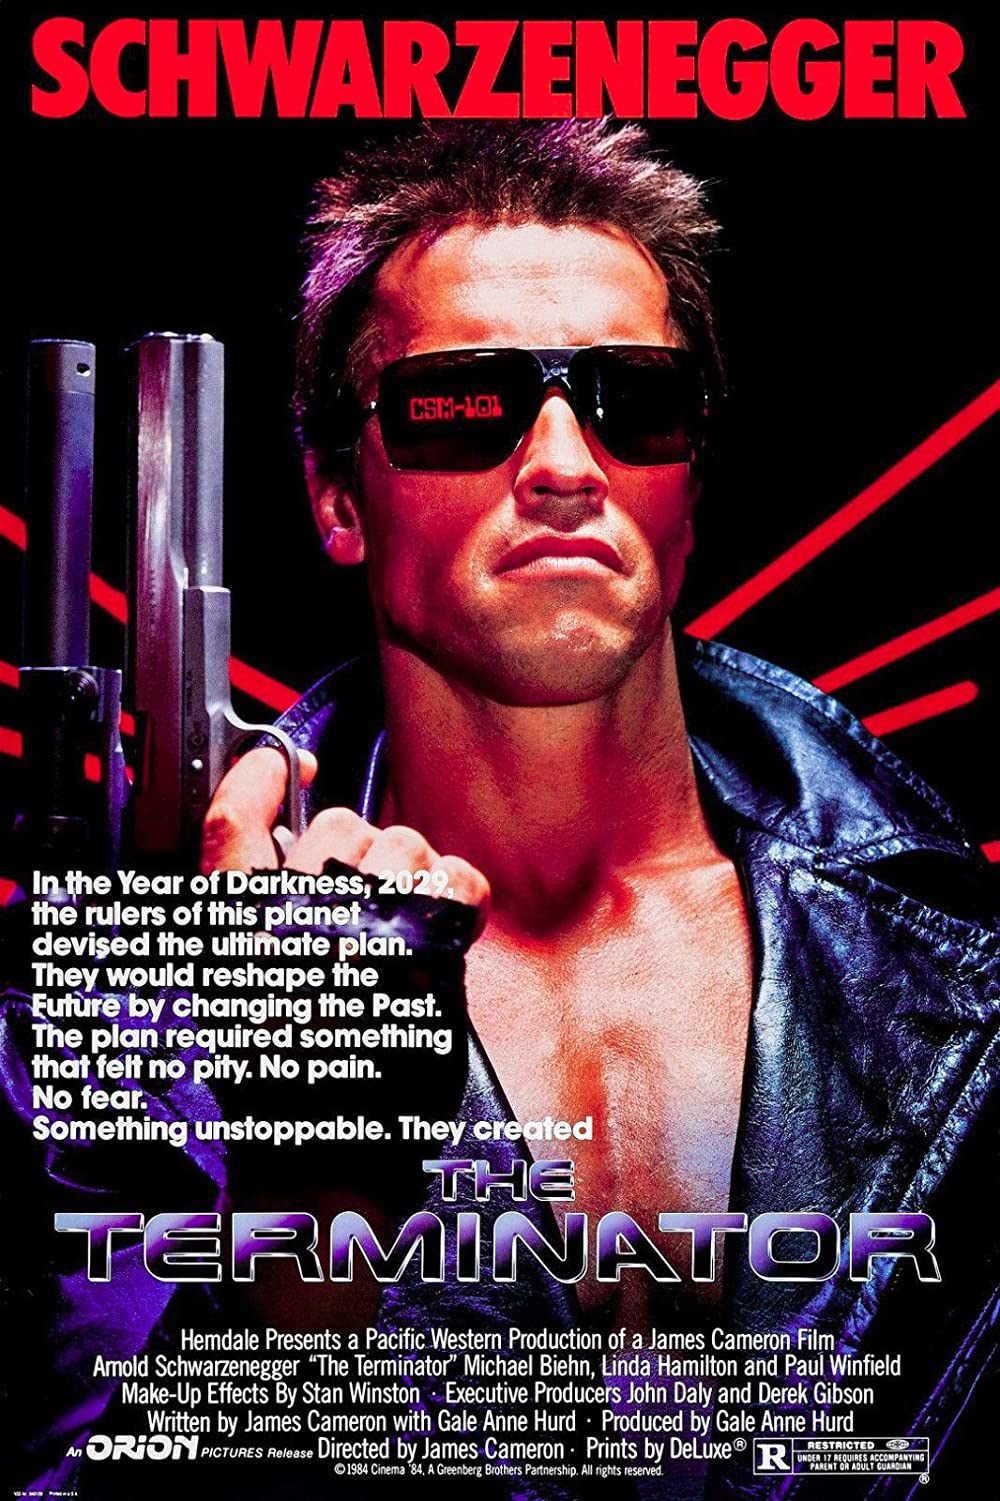 FULL MOVIE: The Terminator (1984) [Action]